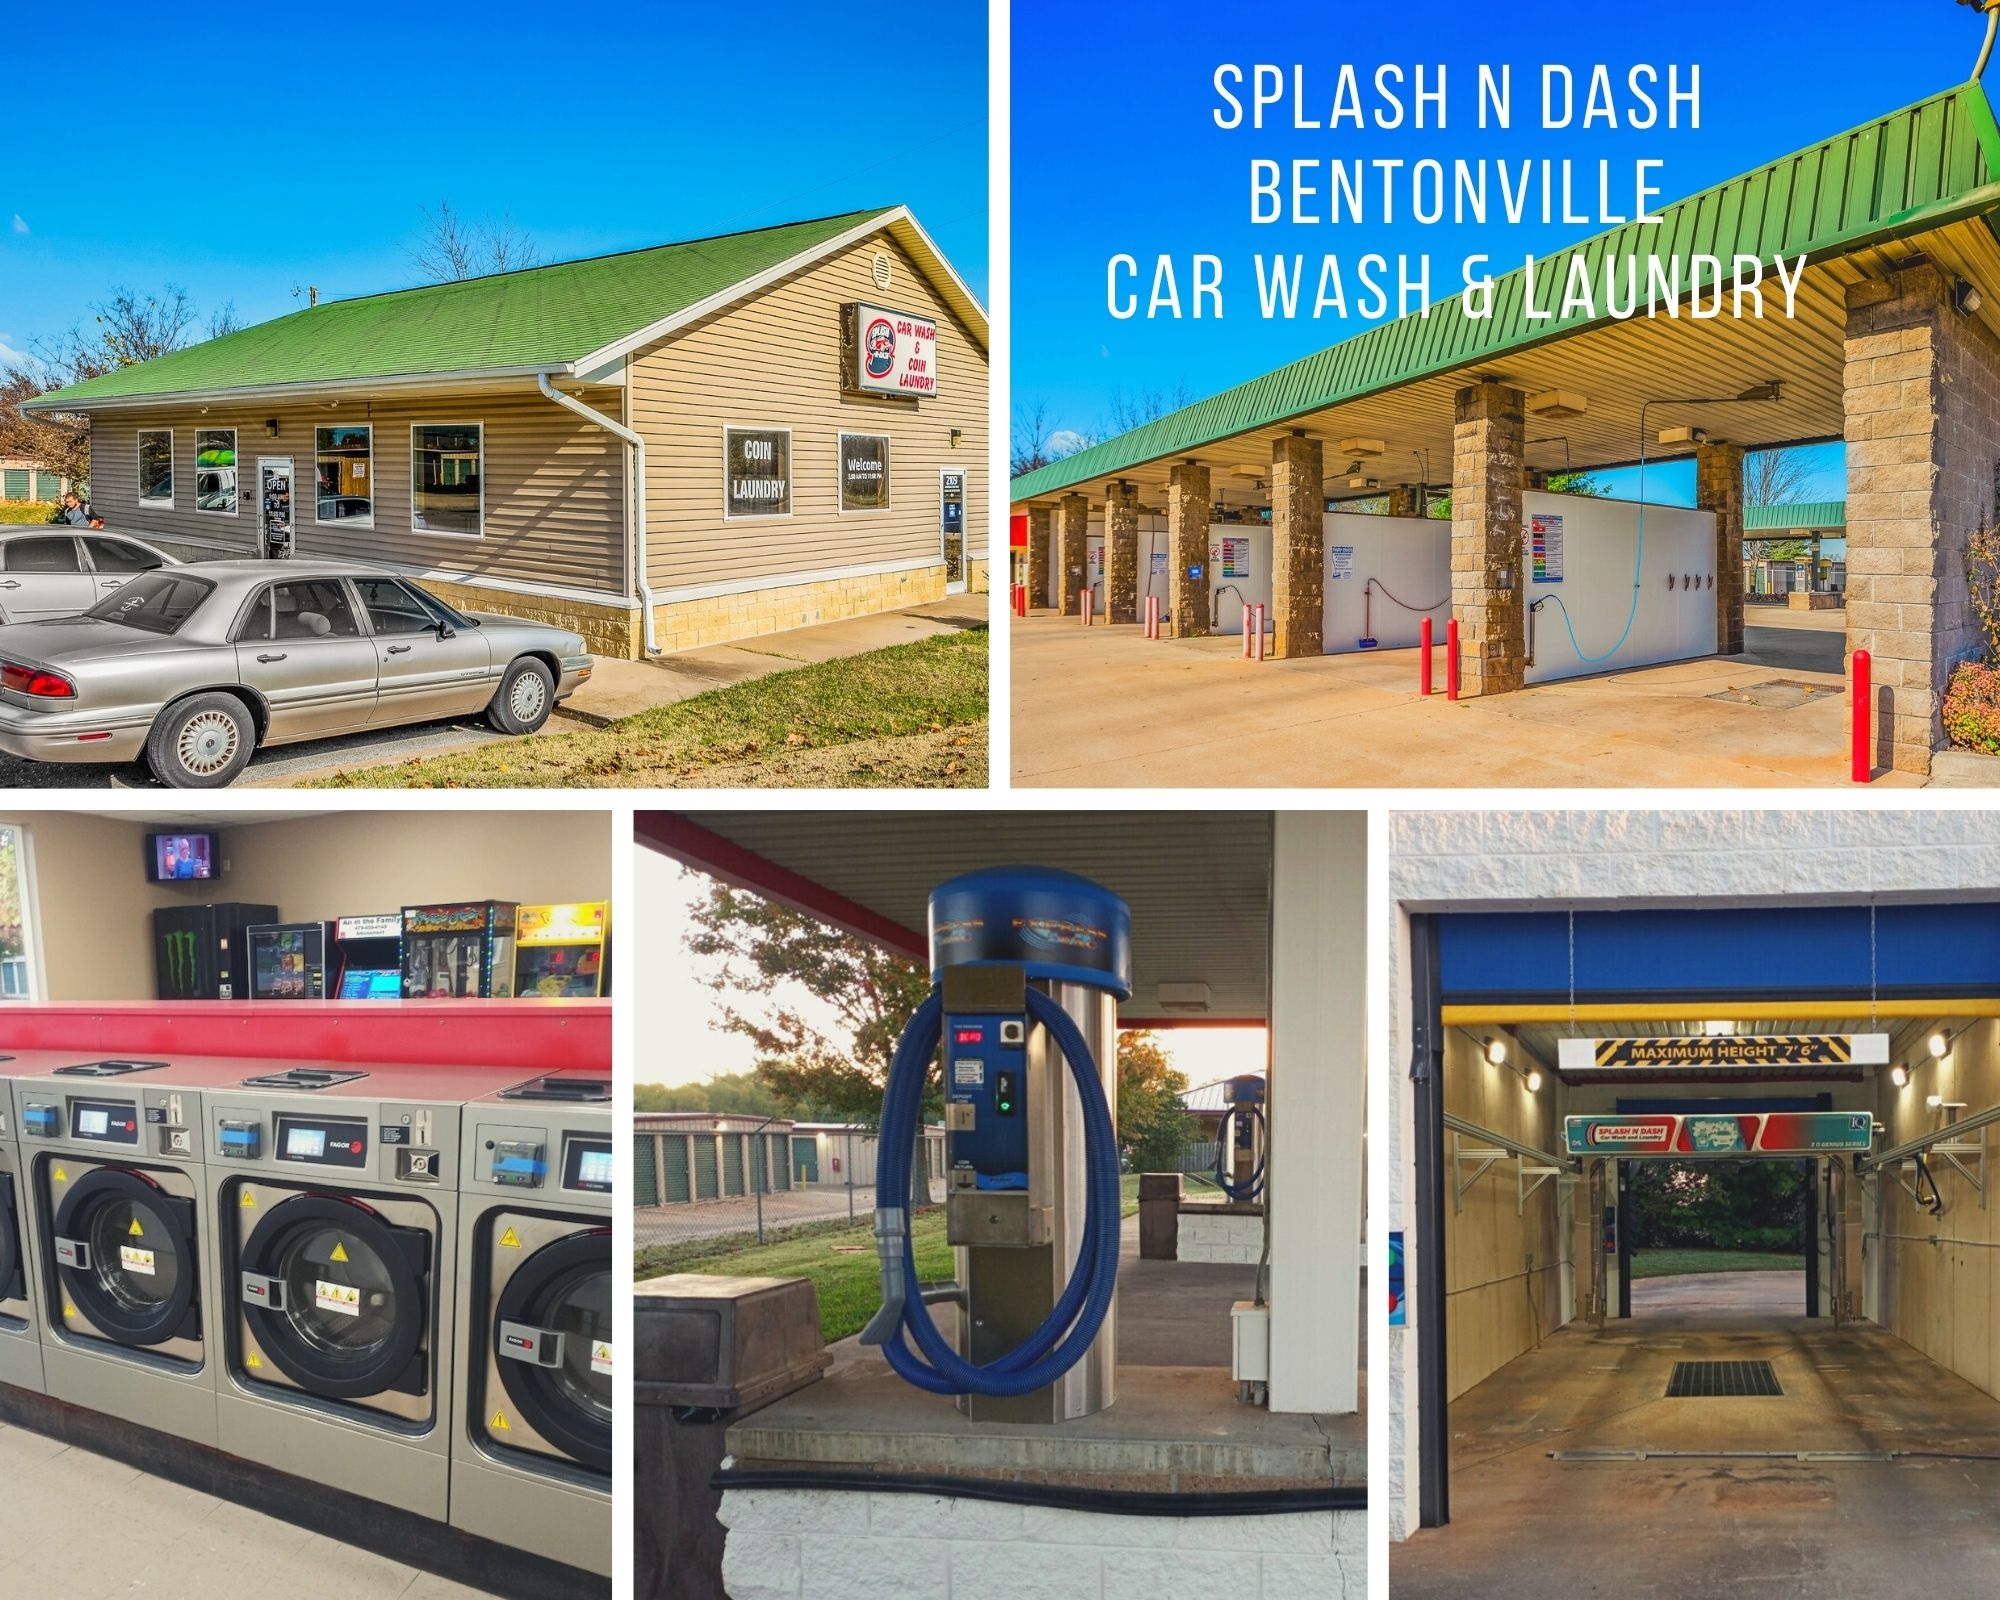 Splash N Dash Car Wash And Laundry Bentonville Arkansas Car Wash